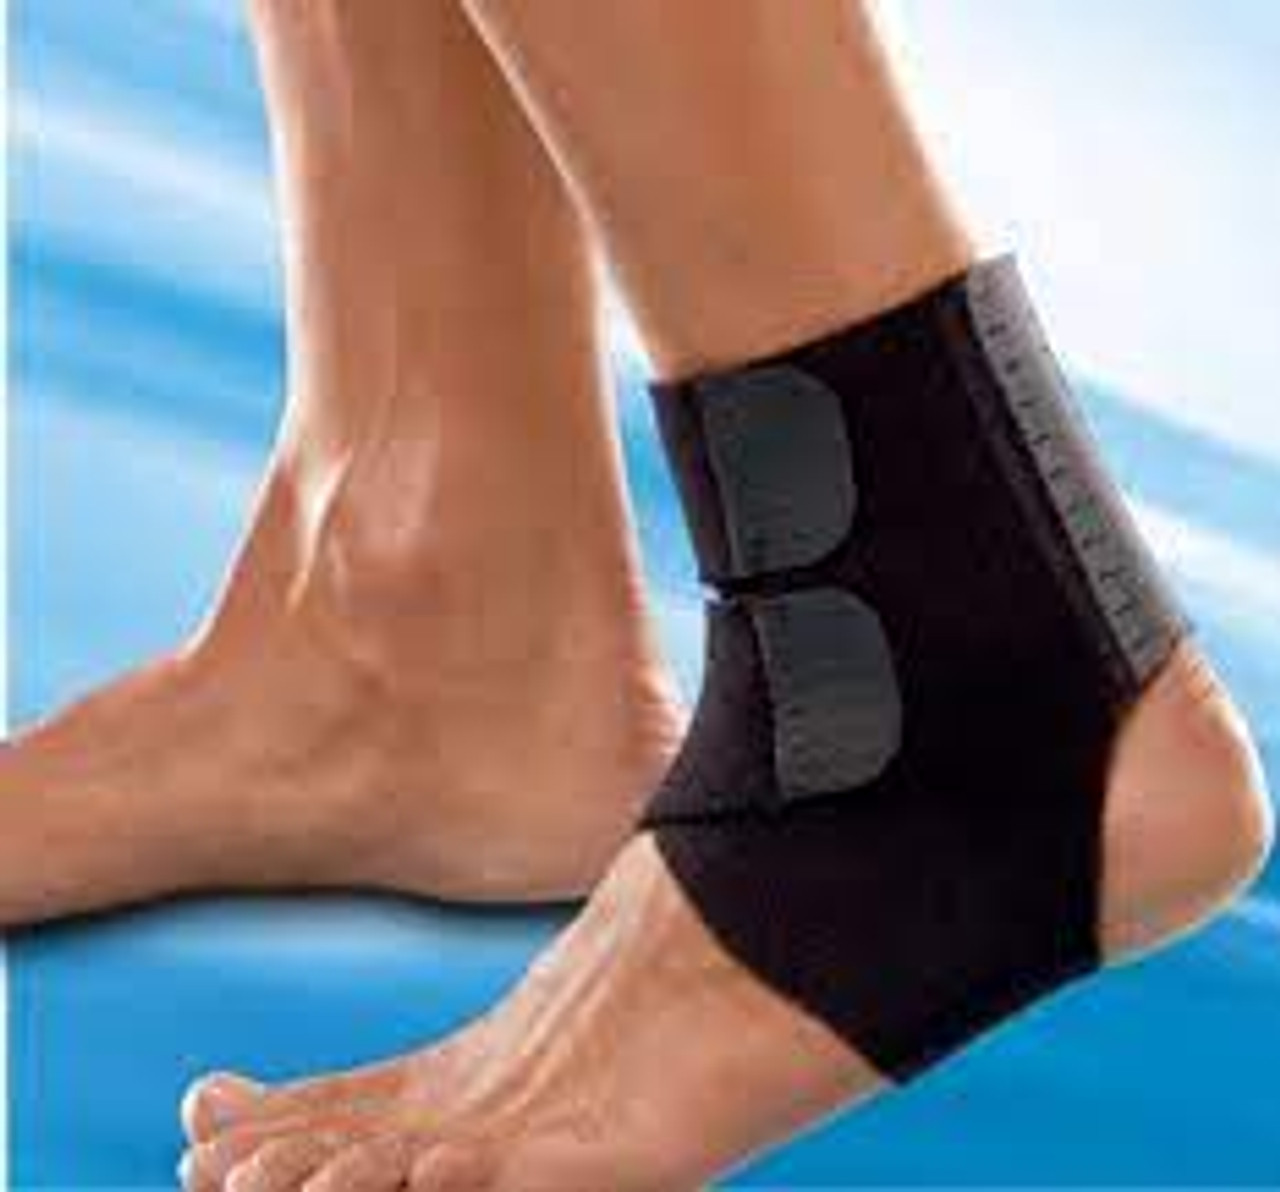 Futuro™ Comfort Ankle Support, L - Gerbes Super Markets